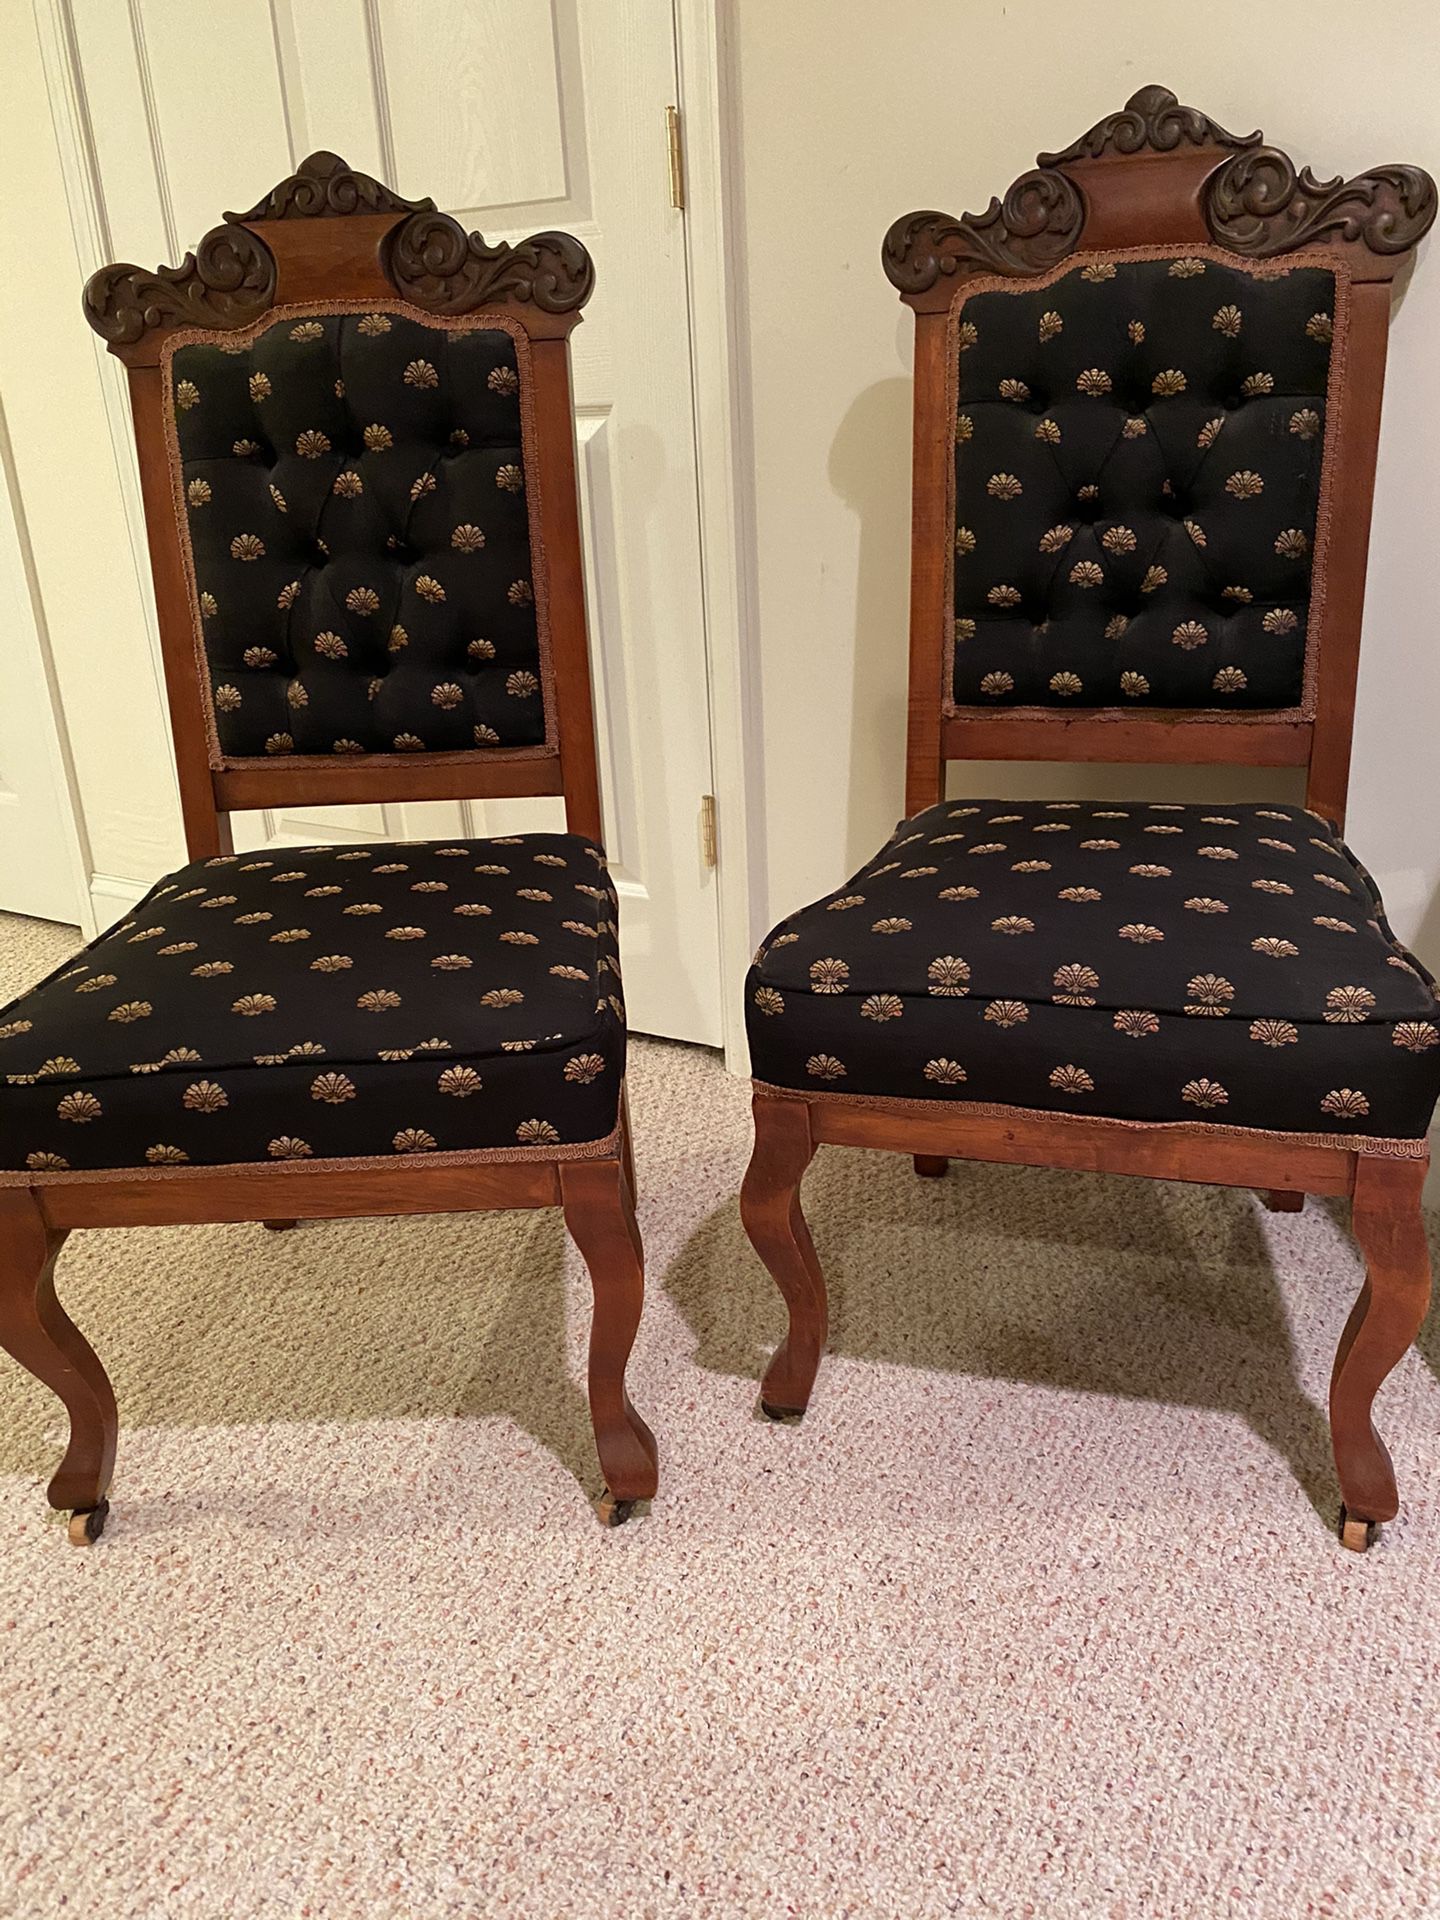 Pair of Victorian-era chairs